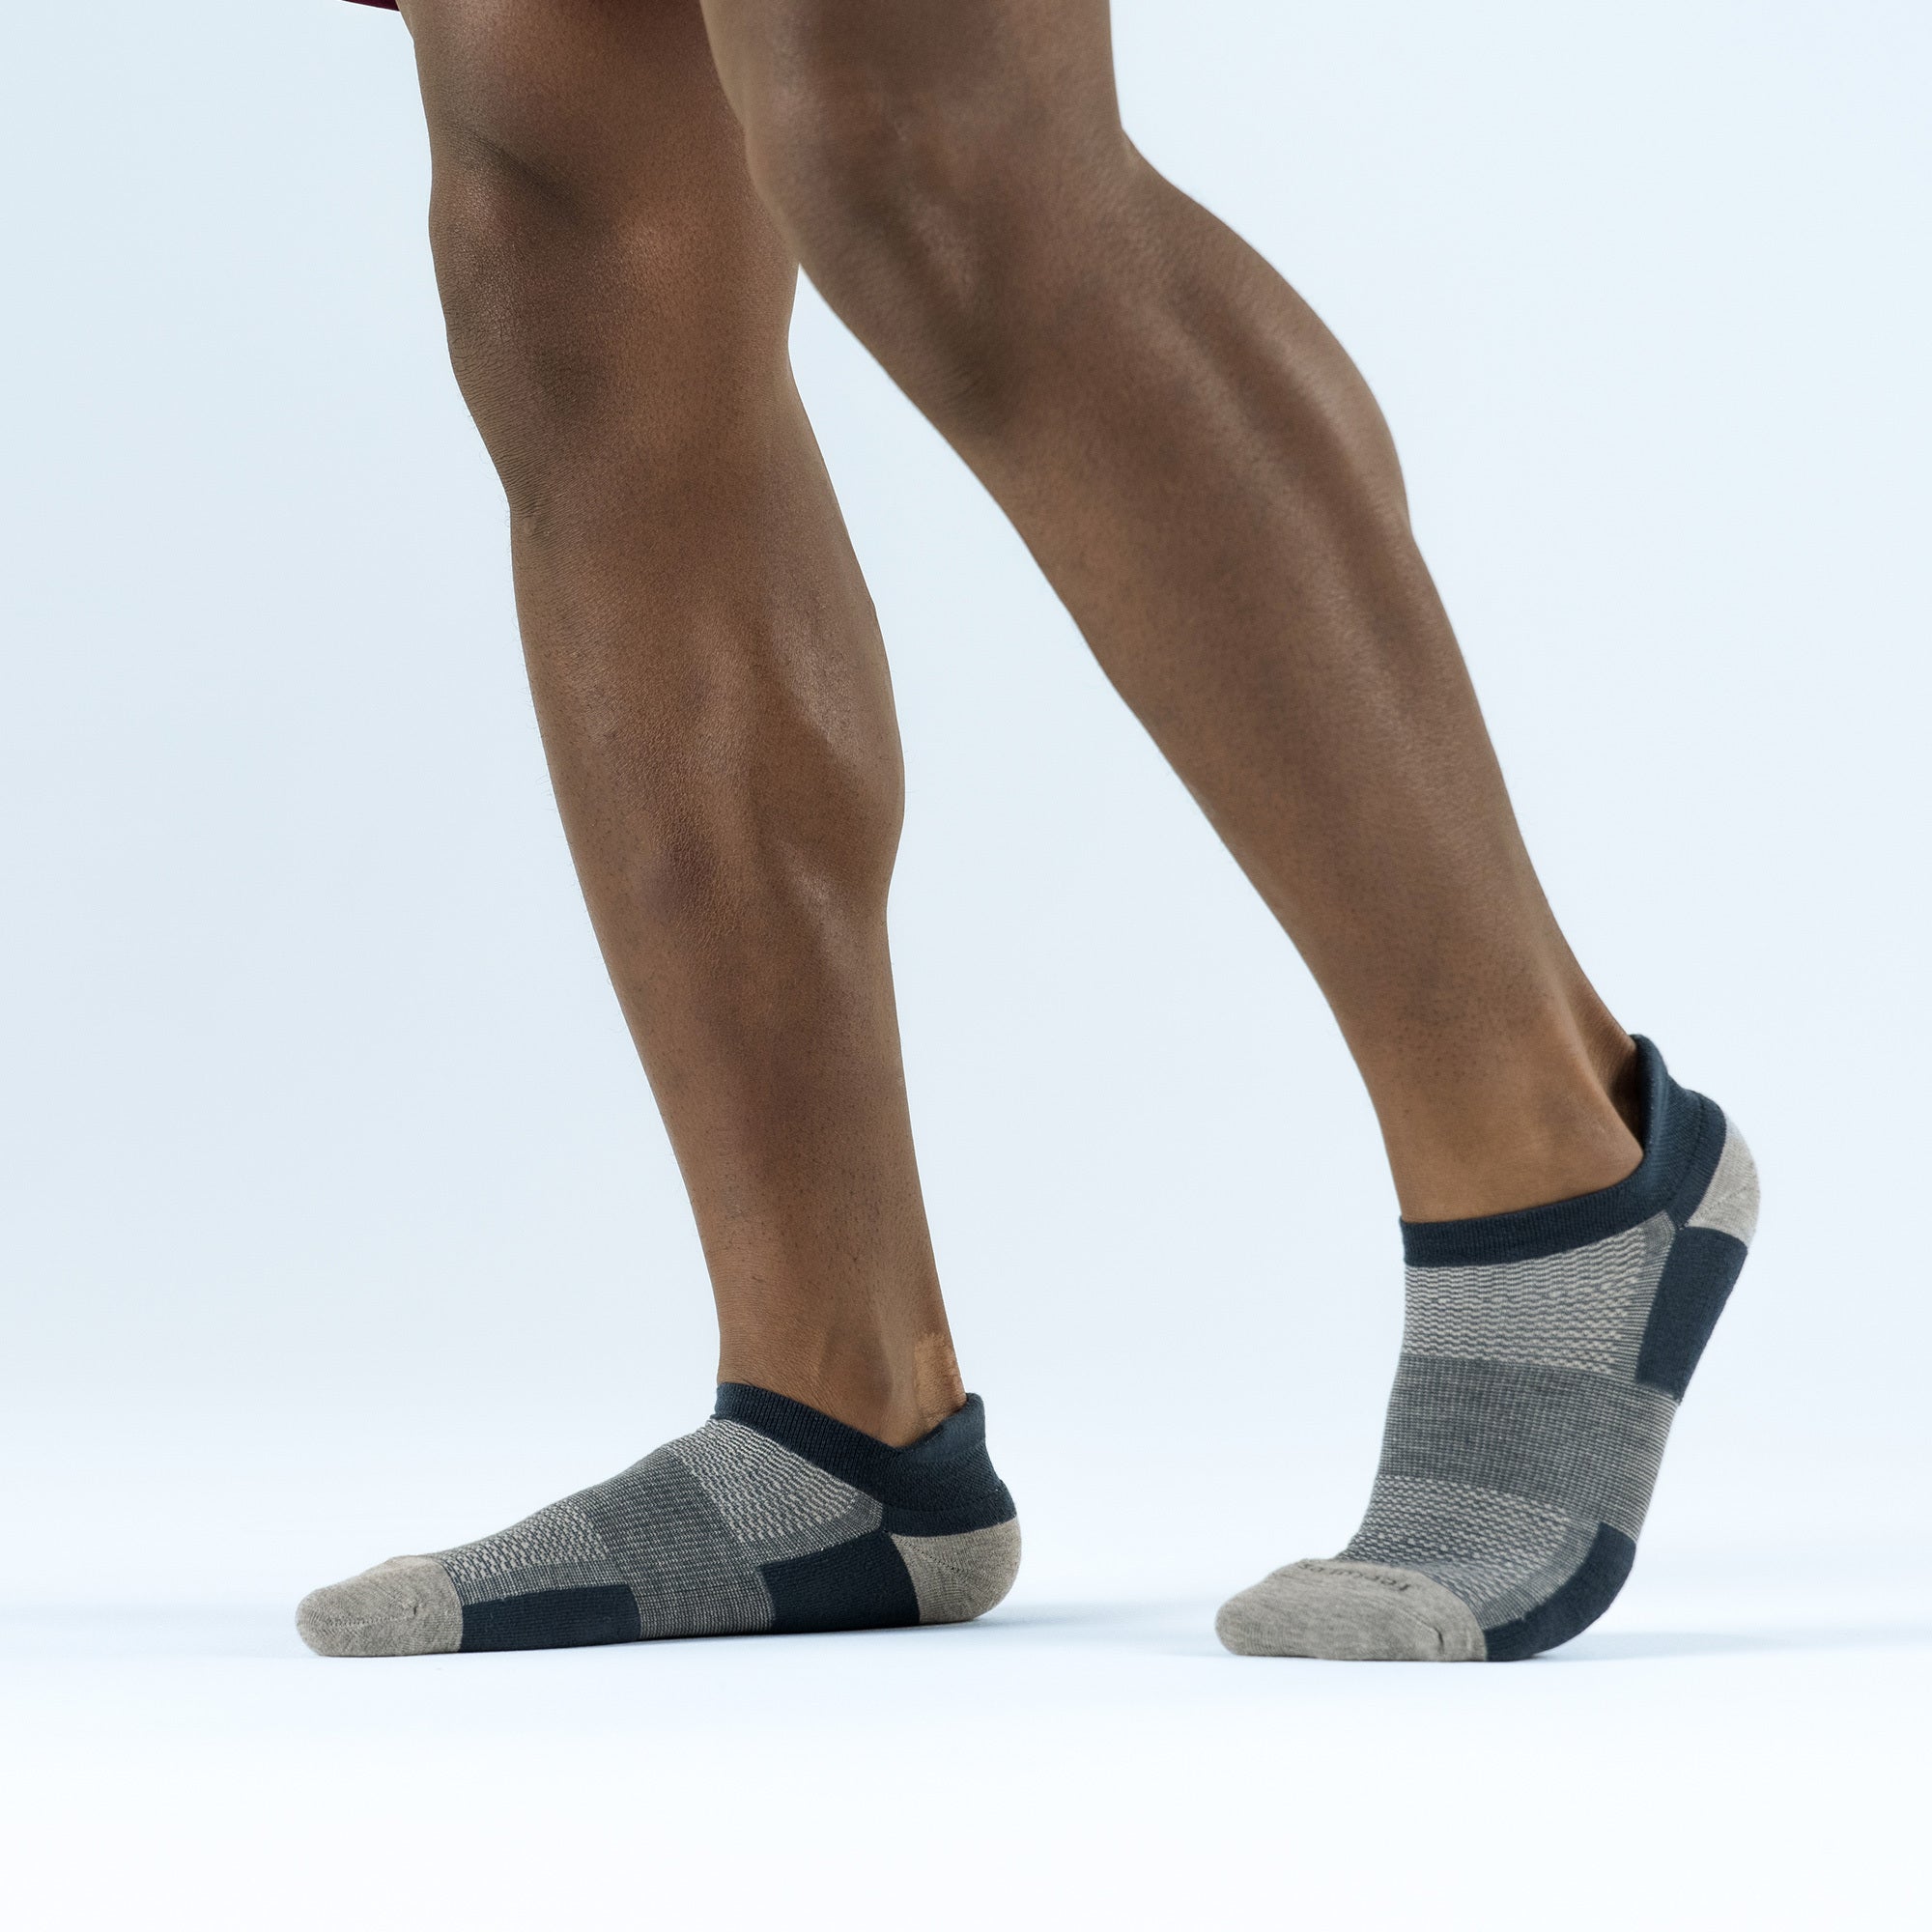 Buy BENCH Men's 3-in-1 Pack Foot Socks 2024 Online